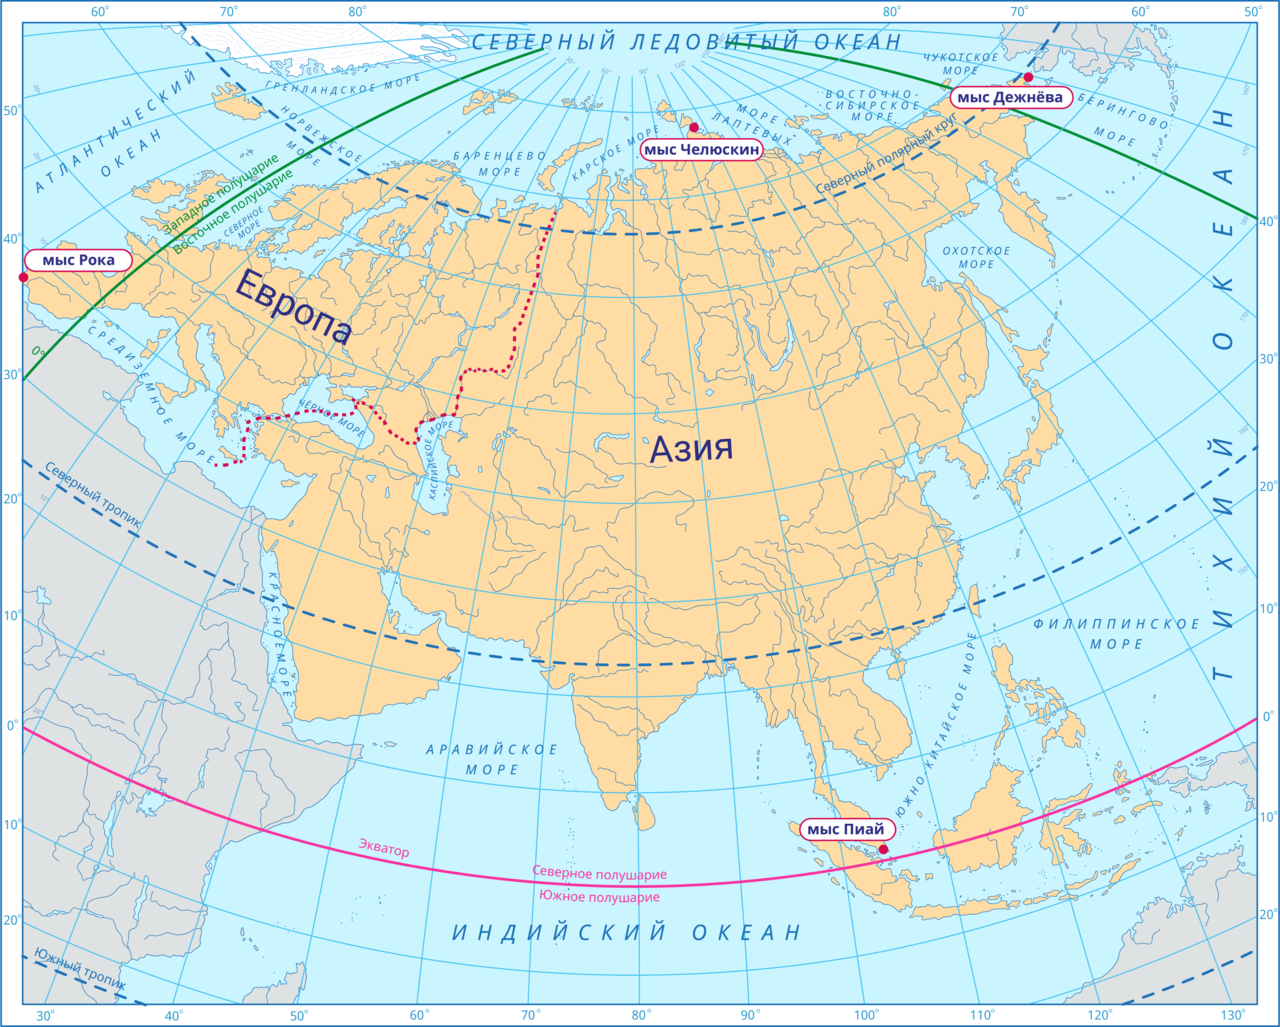 0 параллель на карте. Карта Евразии. Материк Евразия на карте. Карта Евразии географическая.